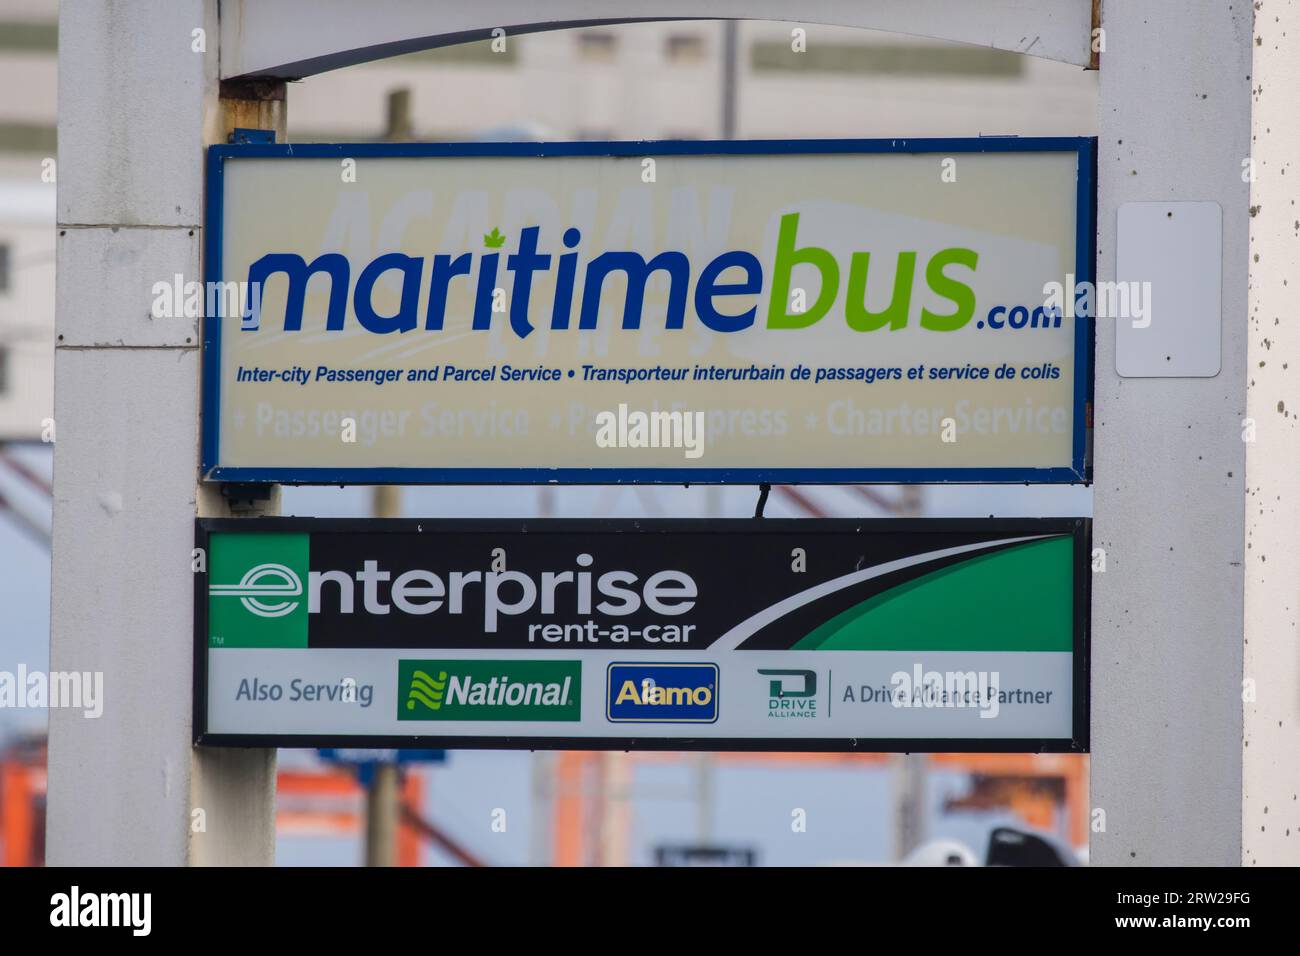 MaritimeBus.com and Enterprise Rent-a-Car banners at Halifax Train Station. Halifax, Nova Scotia, Canada Stock Photo